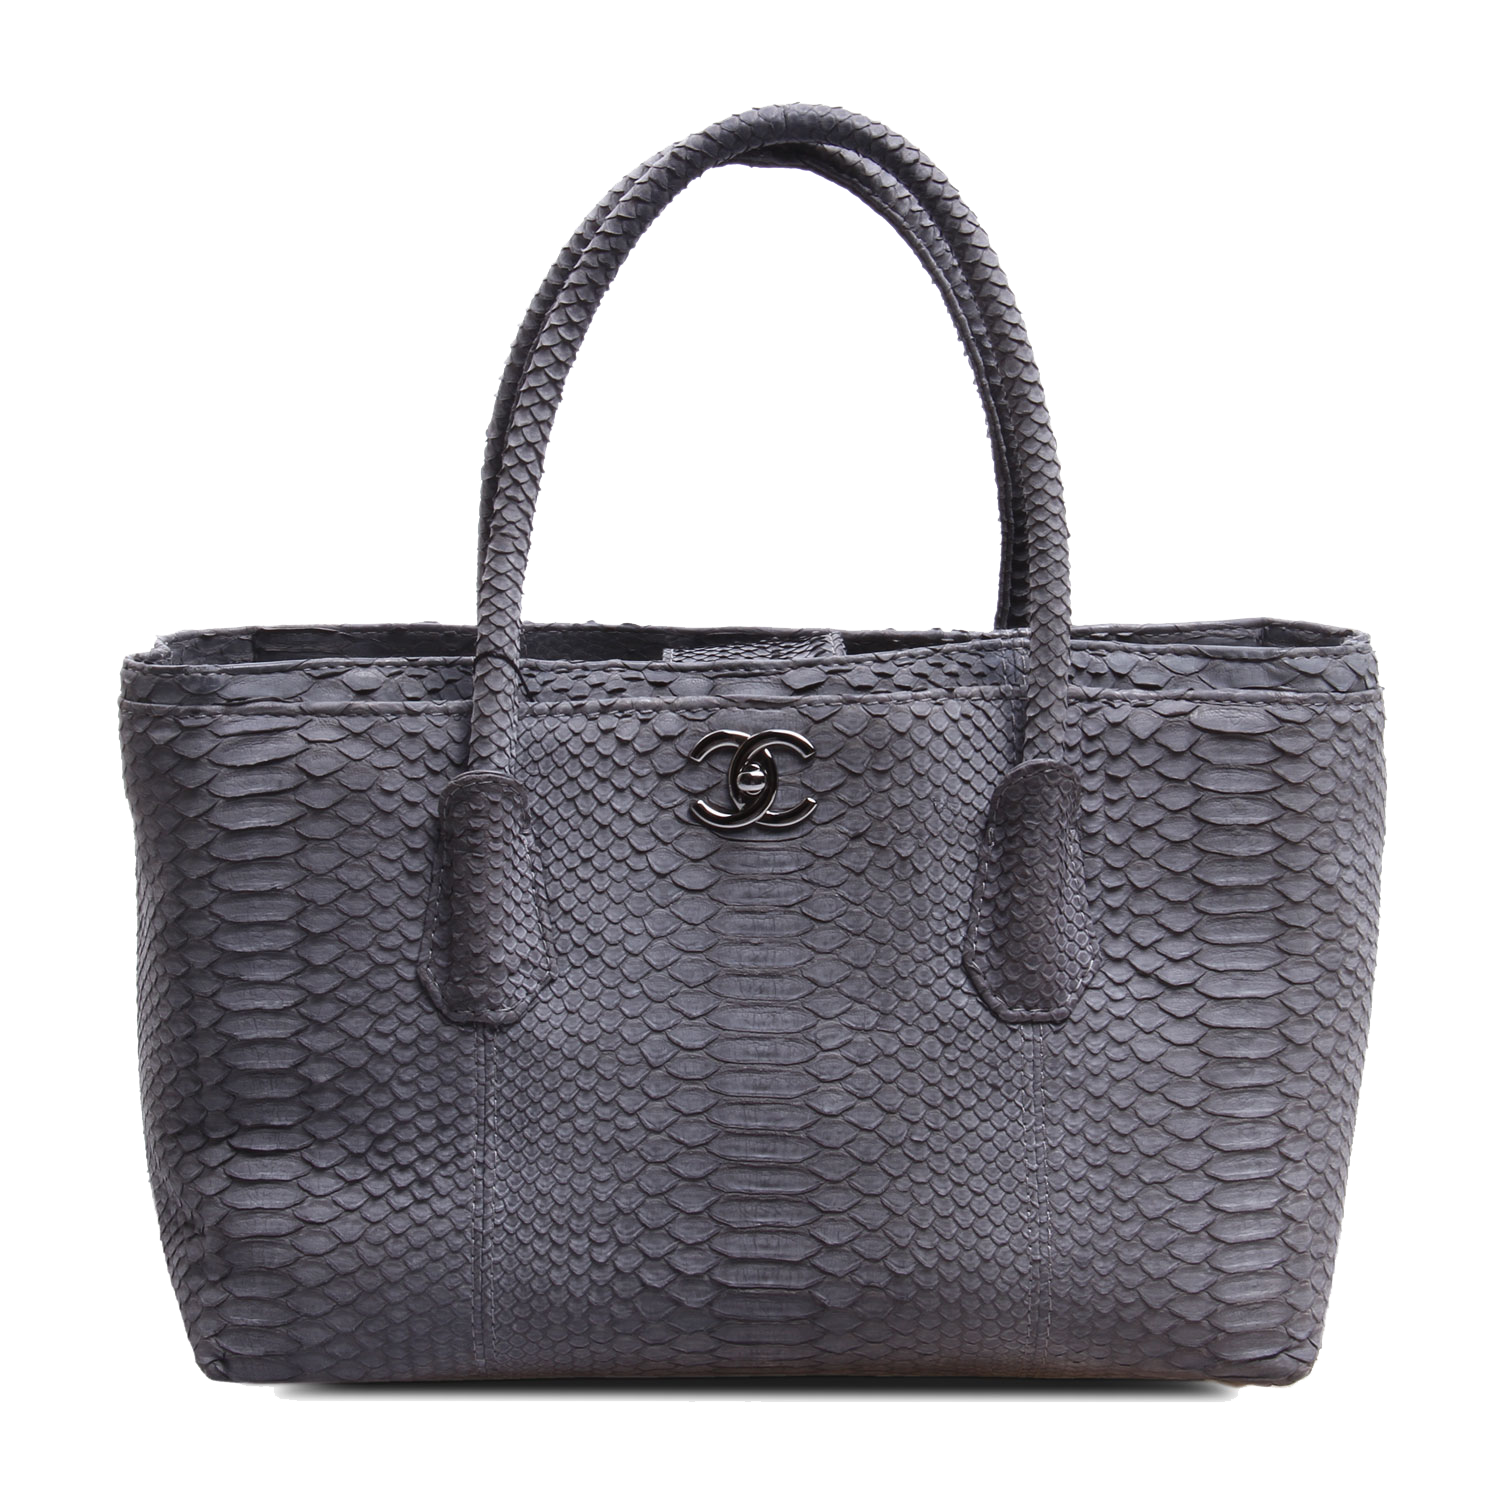 Download Vuitton Tote Leather Louis Snakeskin Bag Pattern HQ PNG Image | FreePNGImg